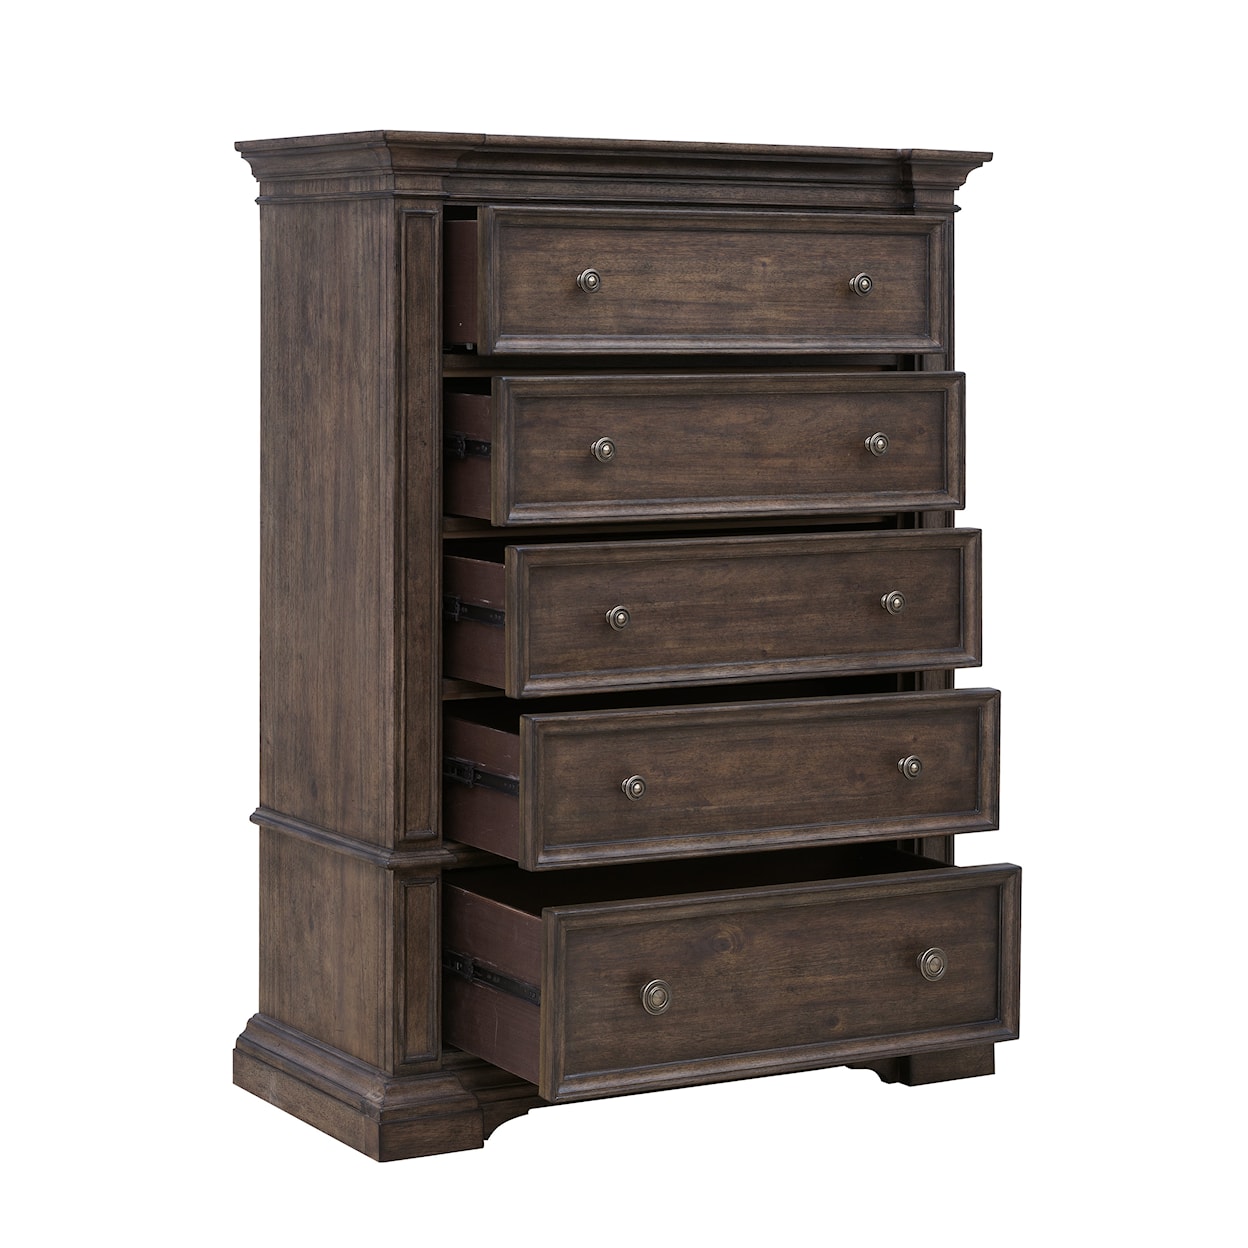 Pulaski Furniture Woodbury 5-Drawer Bedroom Chest